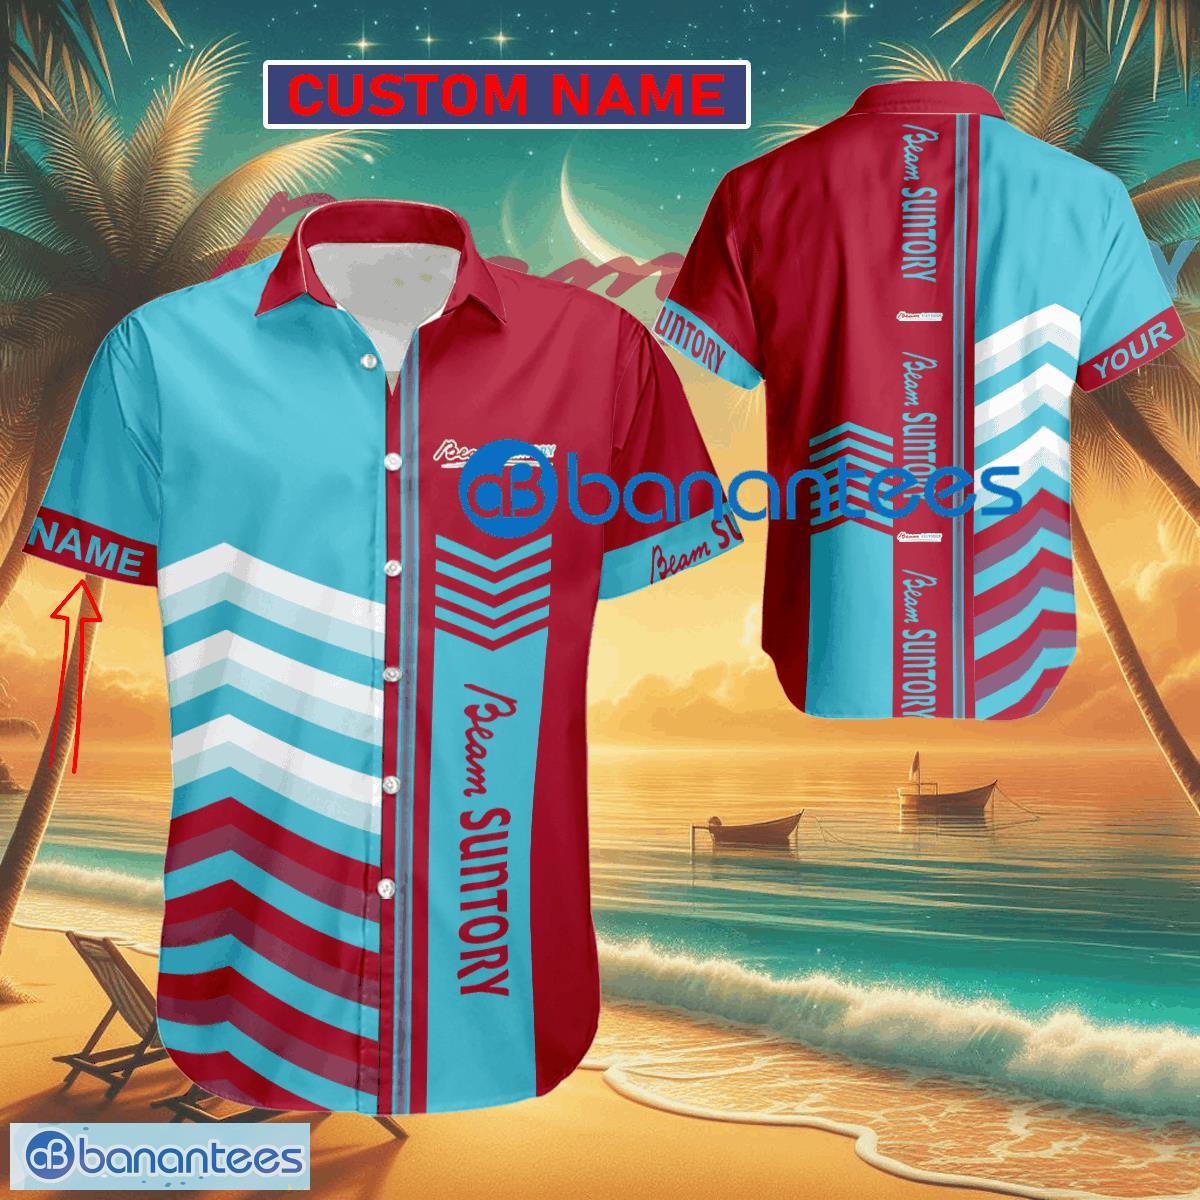 Beam Suntory Arrow Color Hawaiian Shirt Brand New For Men Women Gift Holidays Custom Name - Beam Suntory Arrow Color Hawaiian Shirt Brand New For Men Women Gift Holidays Custom Name